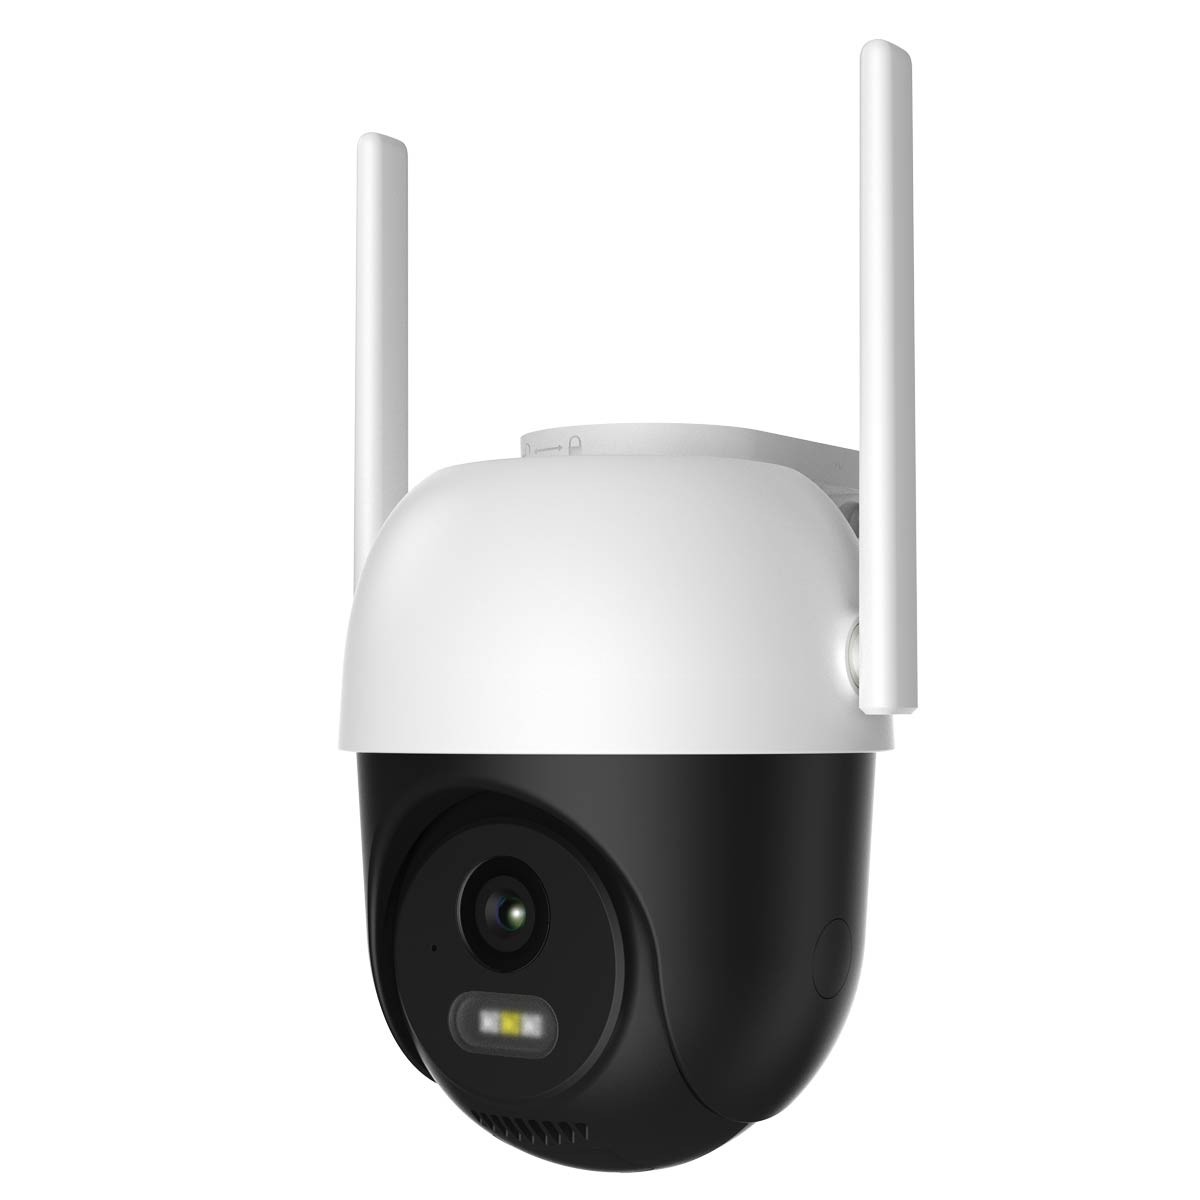 Arenti OP1 4 MP Dualband WLAN Dome Überwachungskamera 